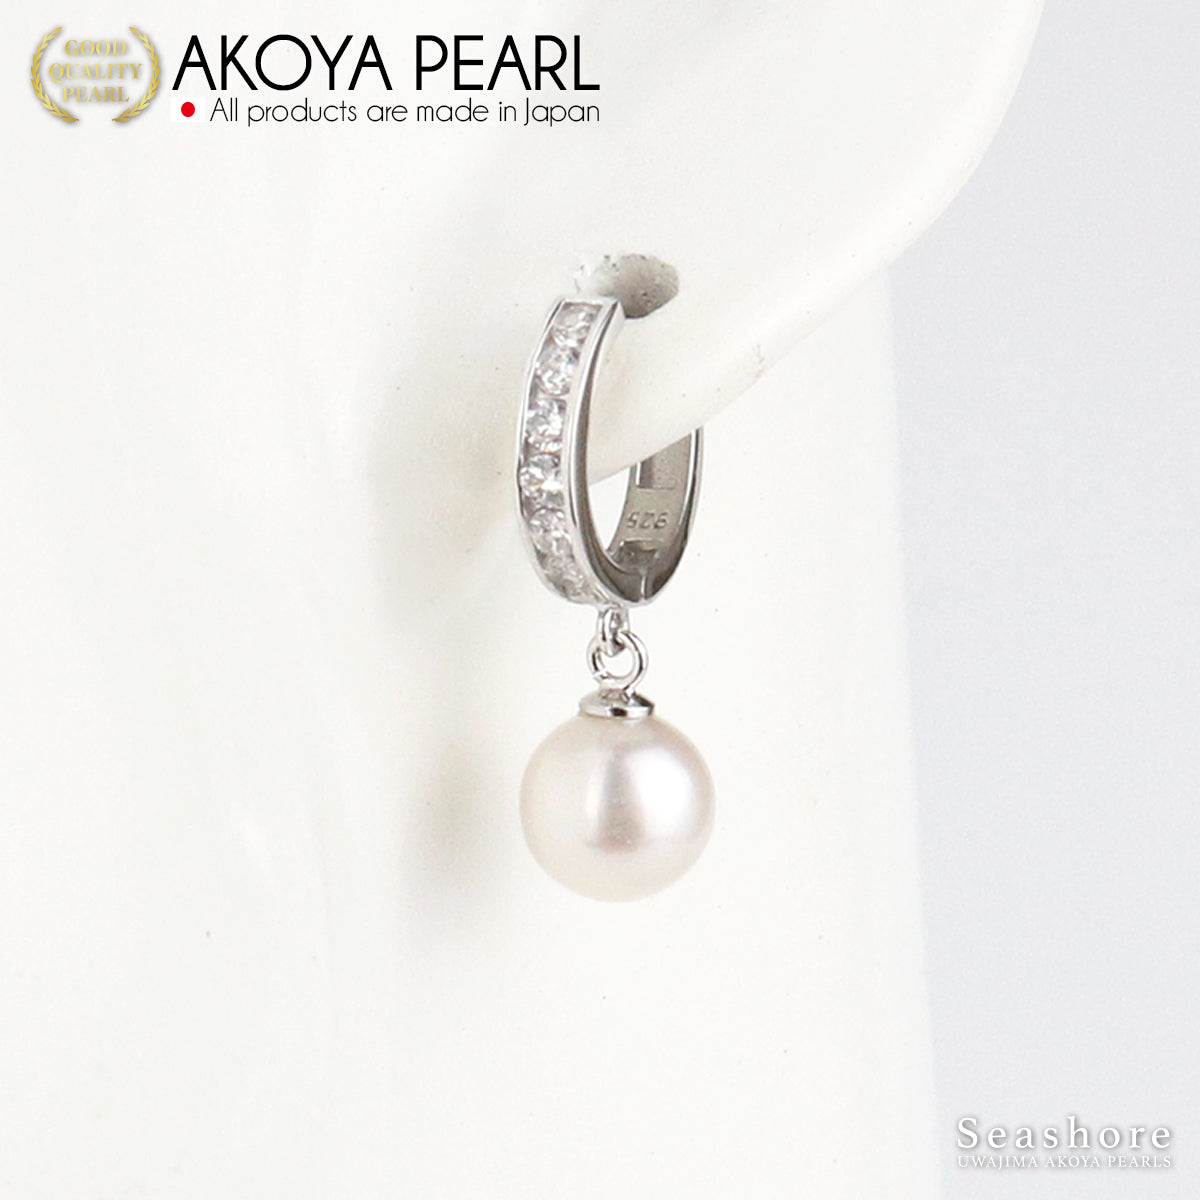 Akoya Pearl Hoop Earrings Zirconia Women's [7.5-8.0mm] SV925 Storage case included Free gift included Akoya Pearl Seashore Seashore [Free Shipping]